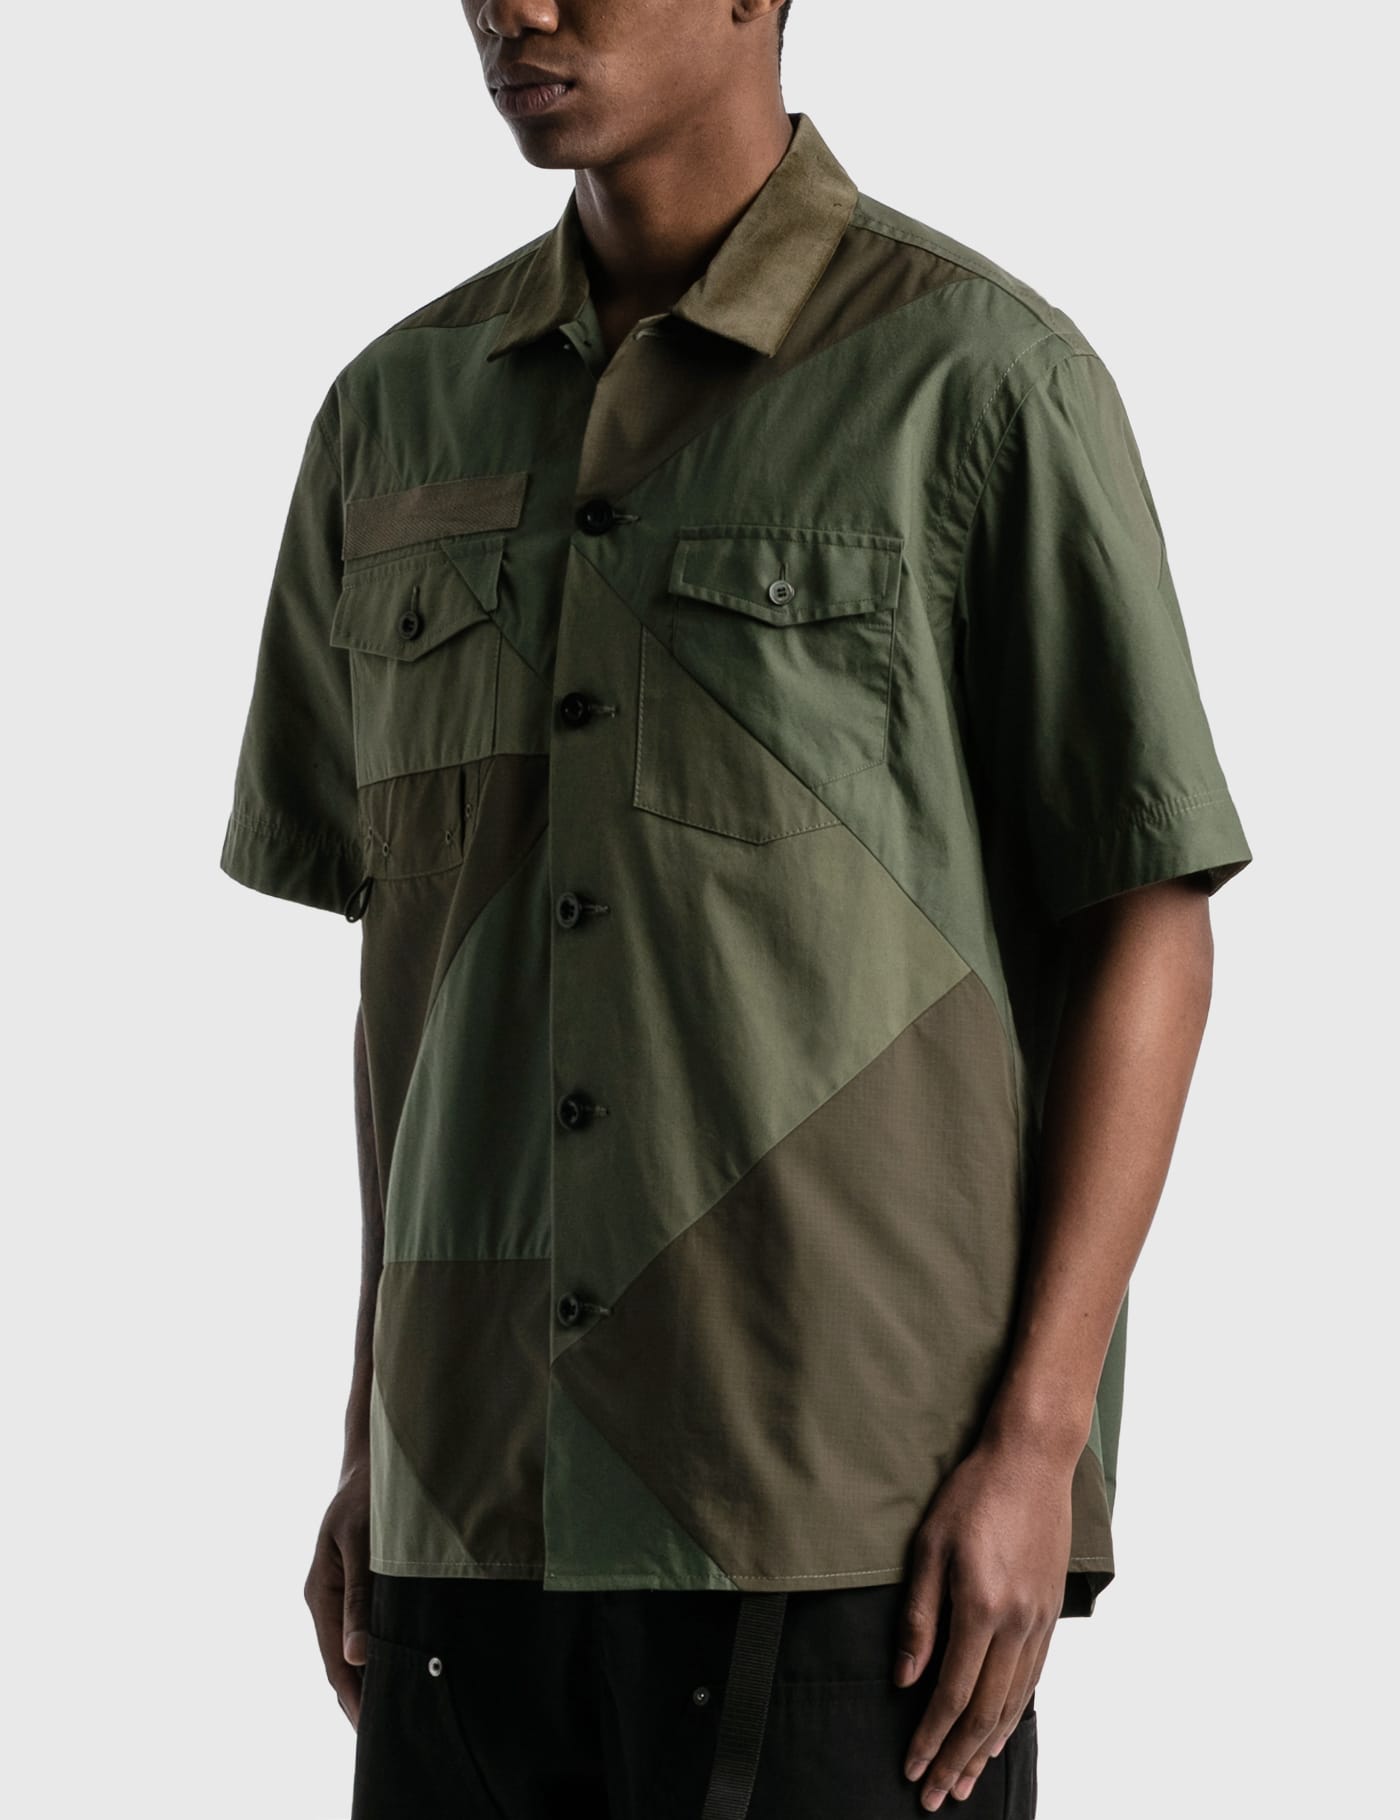 Sacai - Sacai x Hank Willis Thomas Solid Mix Shirt | HBX -  ハイプビースト(Hypebeast)が厳選したグローバルファッション&ライフスタイル